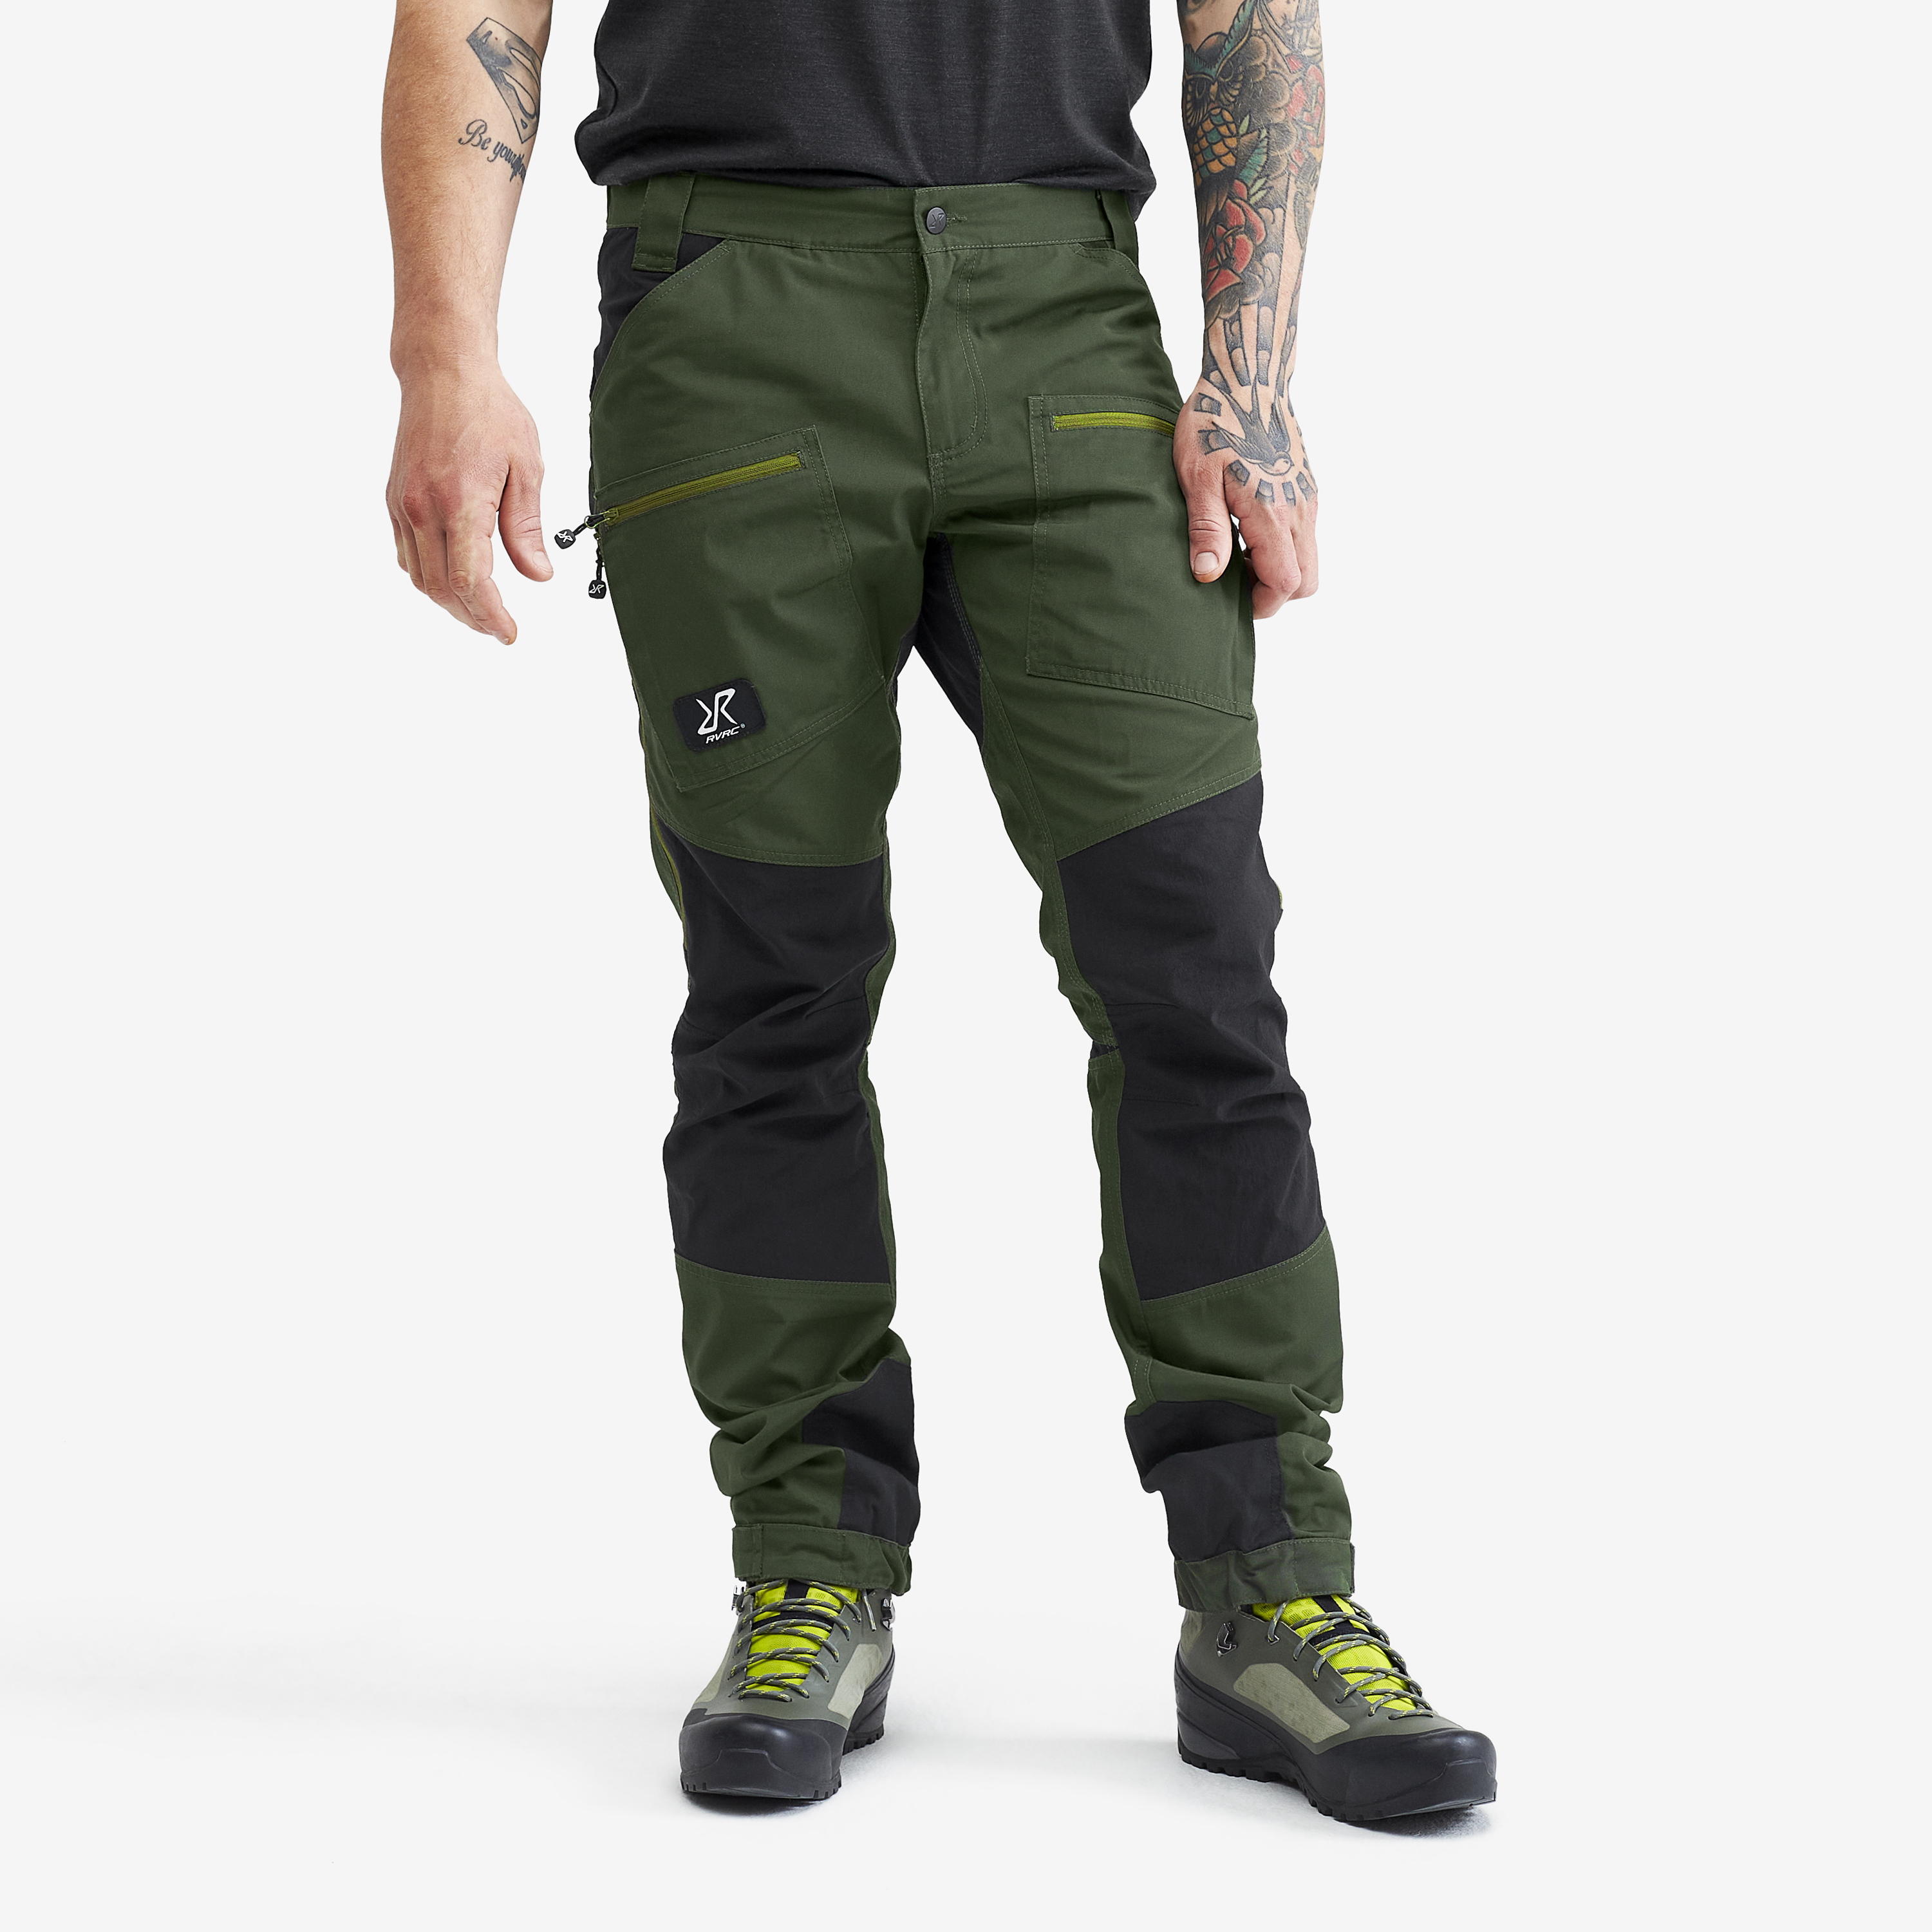 Nordwand Pro Pants Green/Black Herre